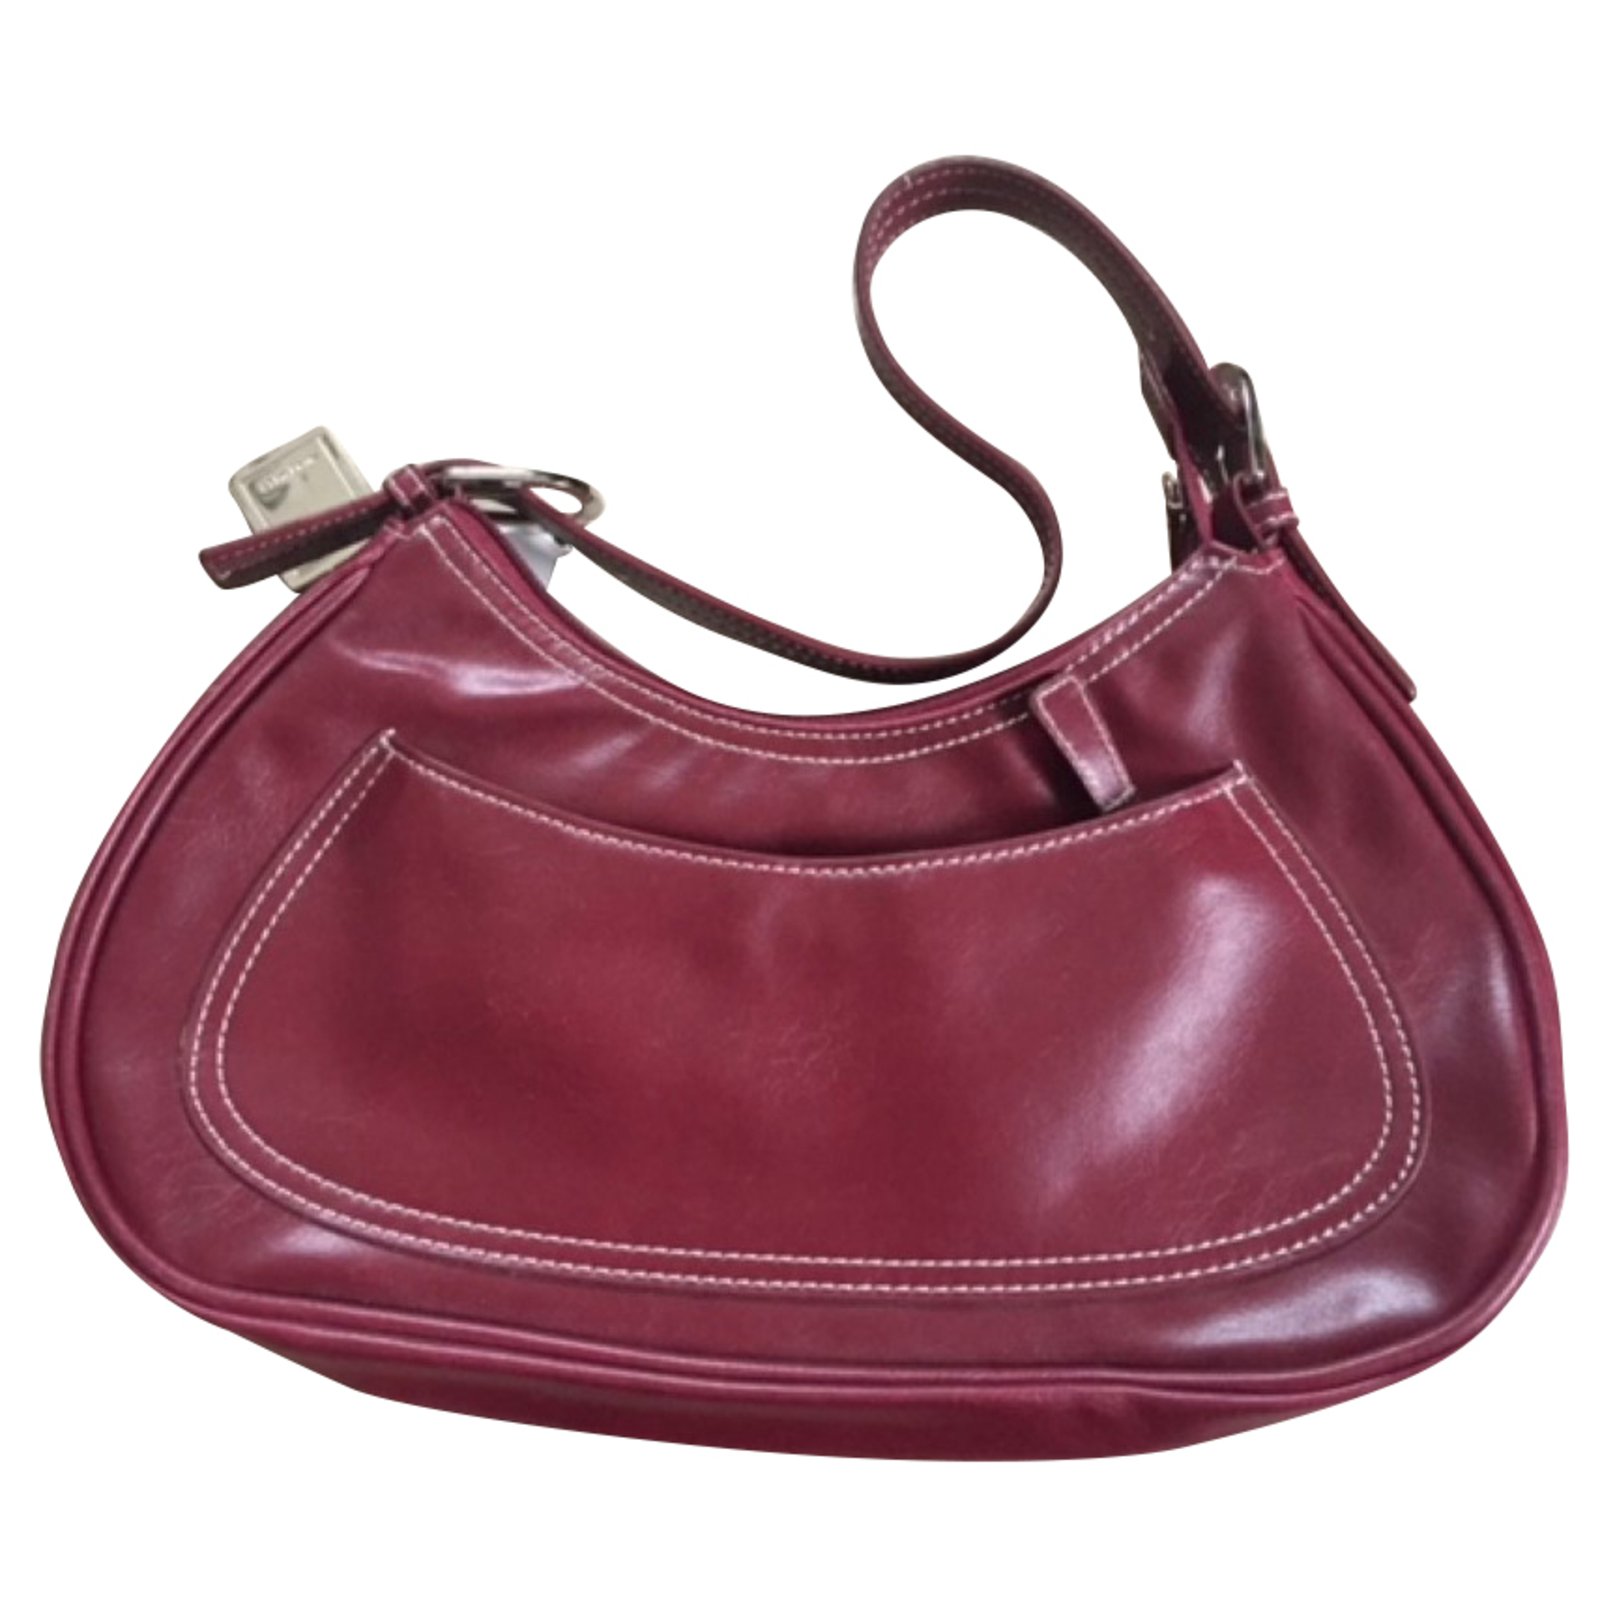 NWT Nine West Classic Red Handbag. Original Tags | Red handbag, Tan  shoulder bag, Ninewest bags